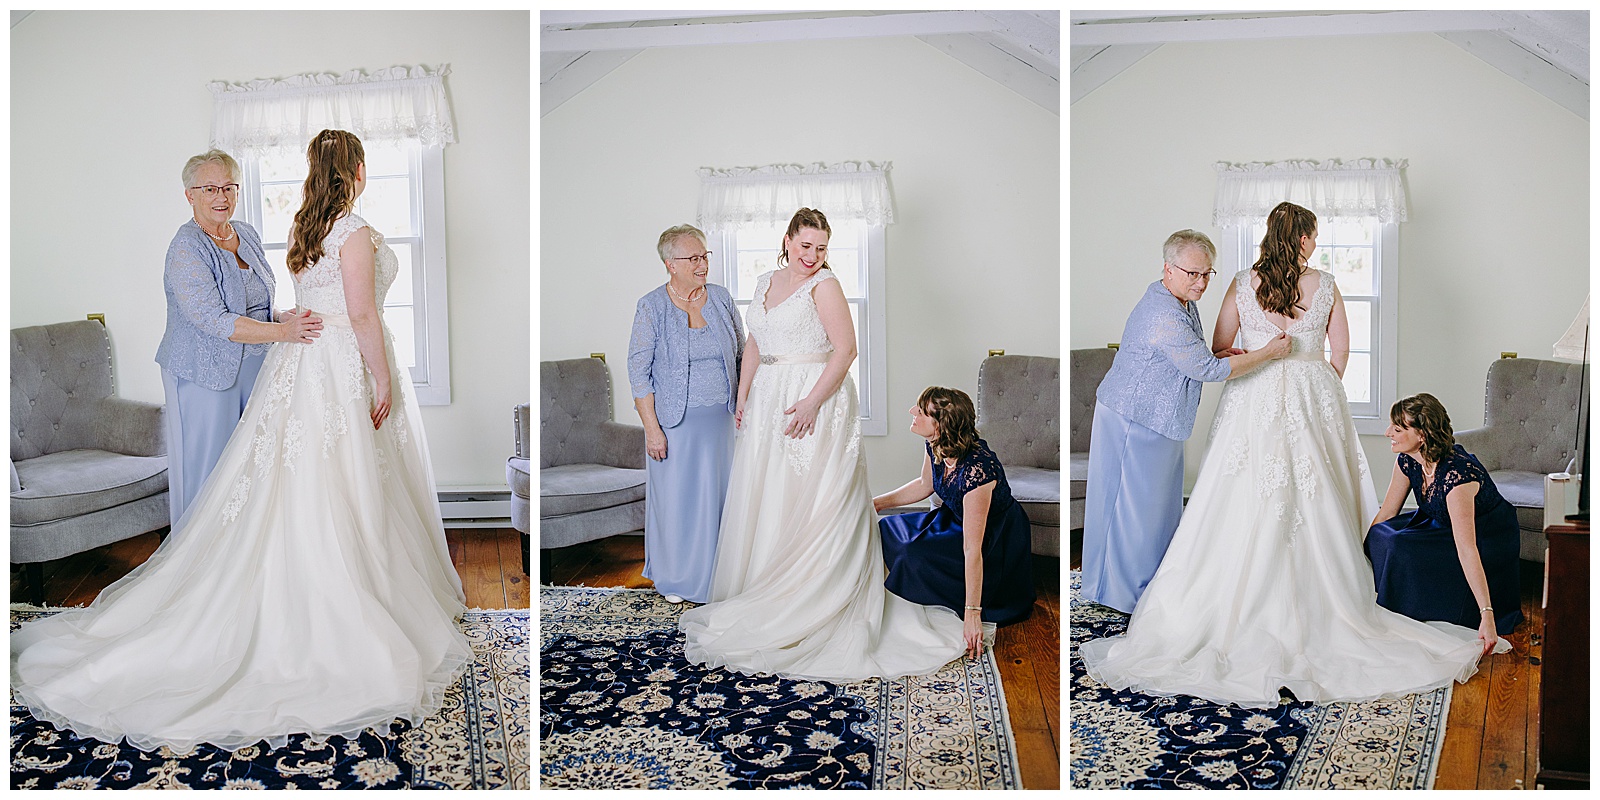 brides mom and friend help her put wedding dress on